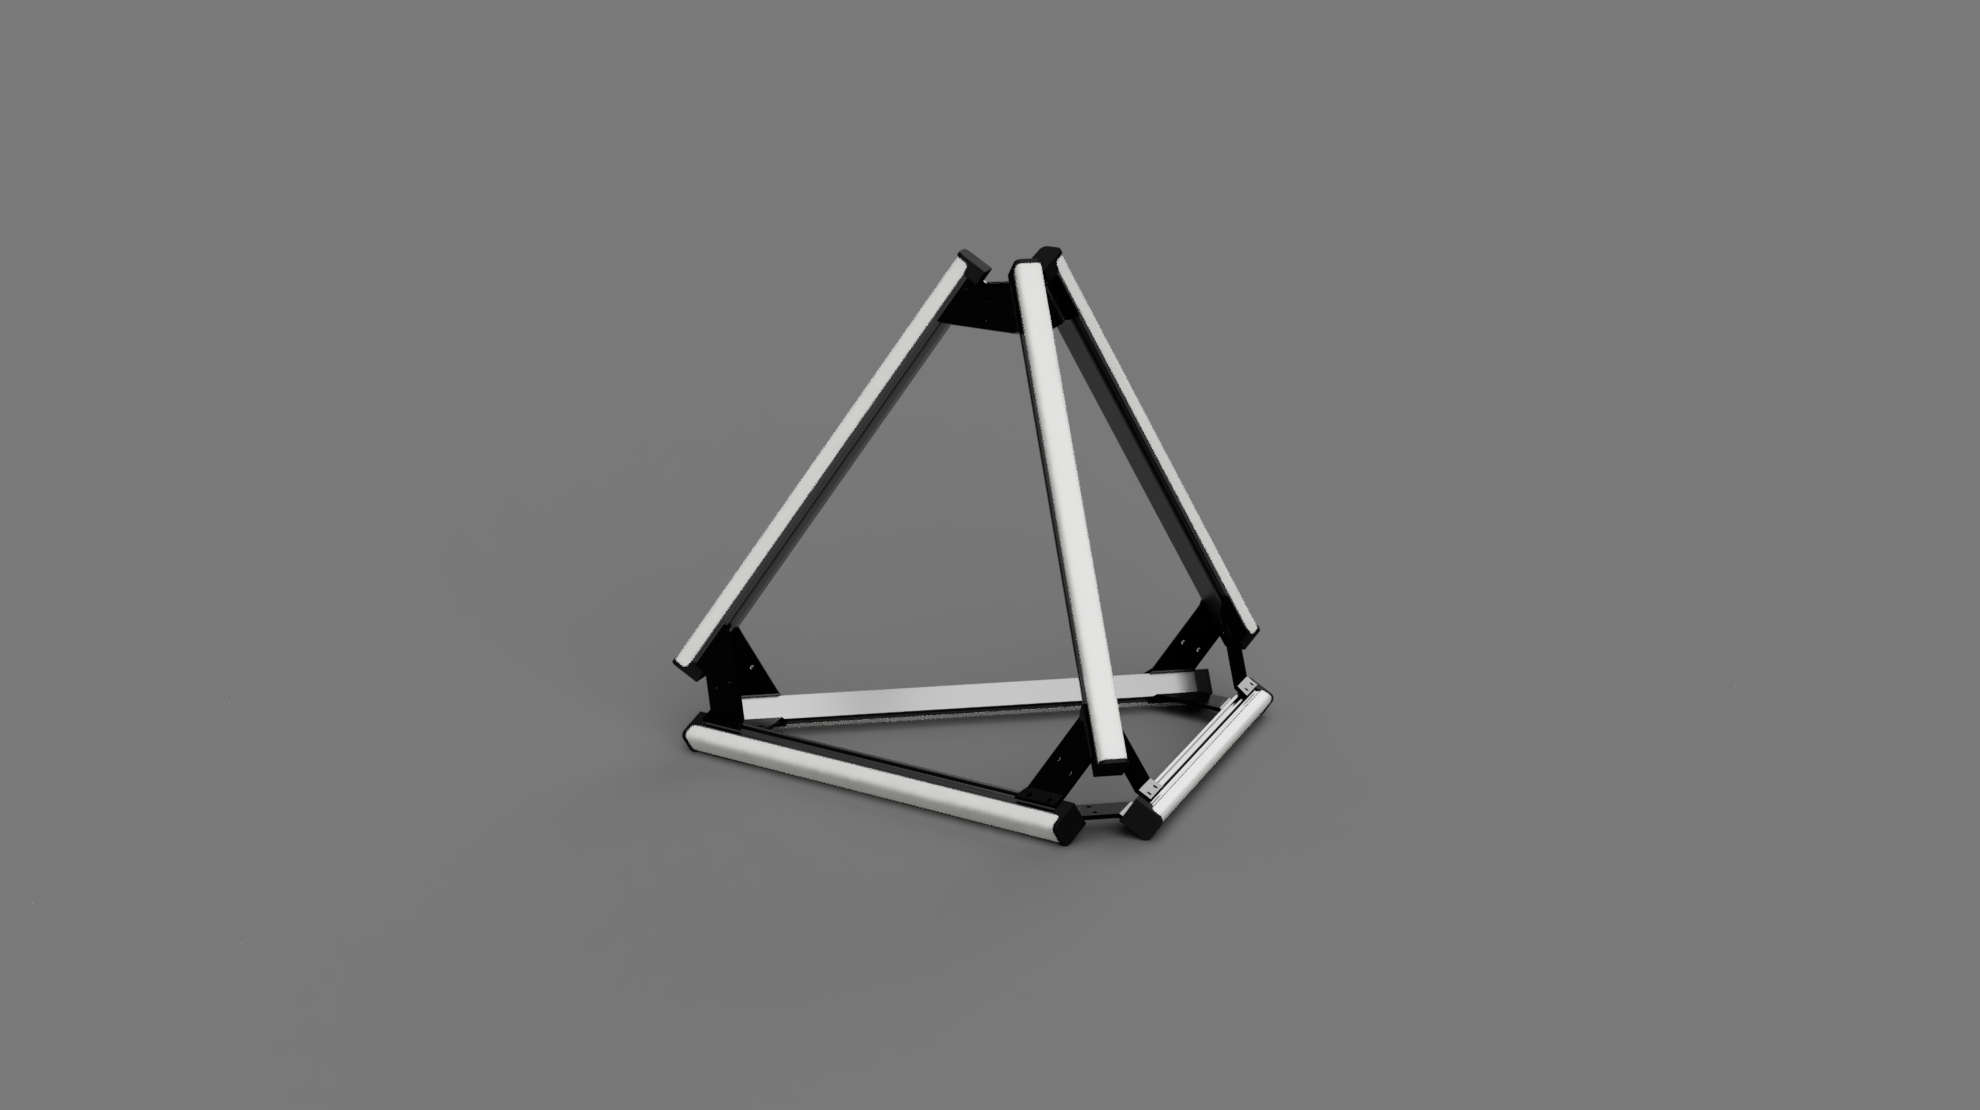 tetrahedron platonic solid